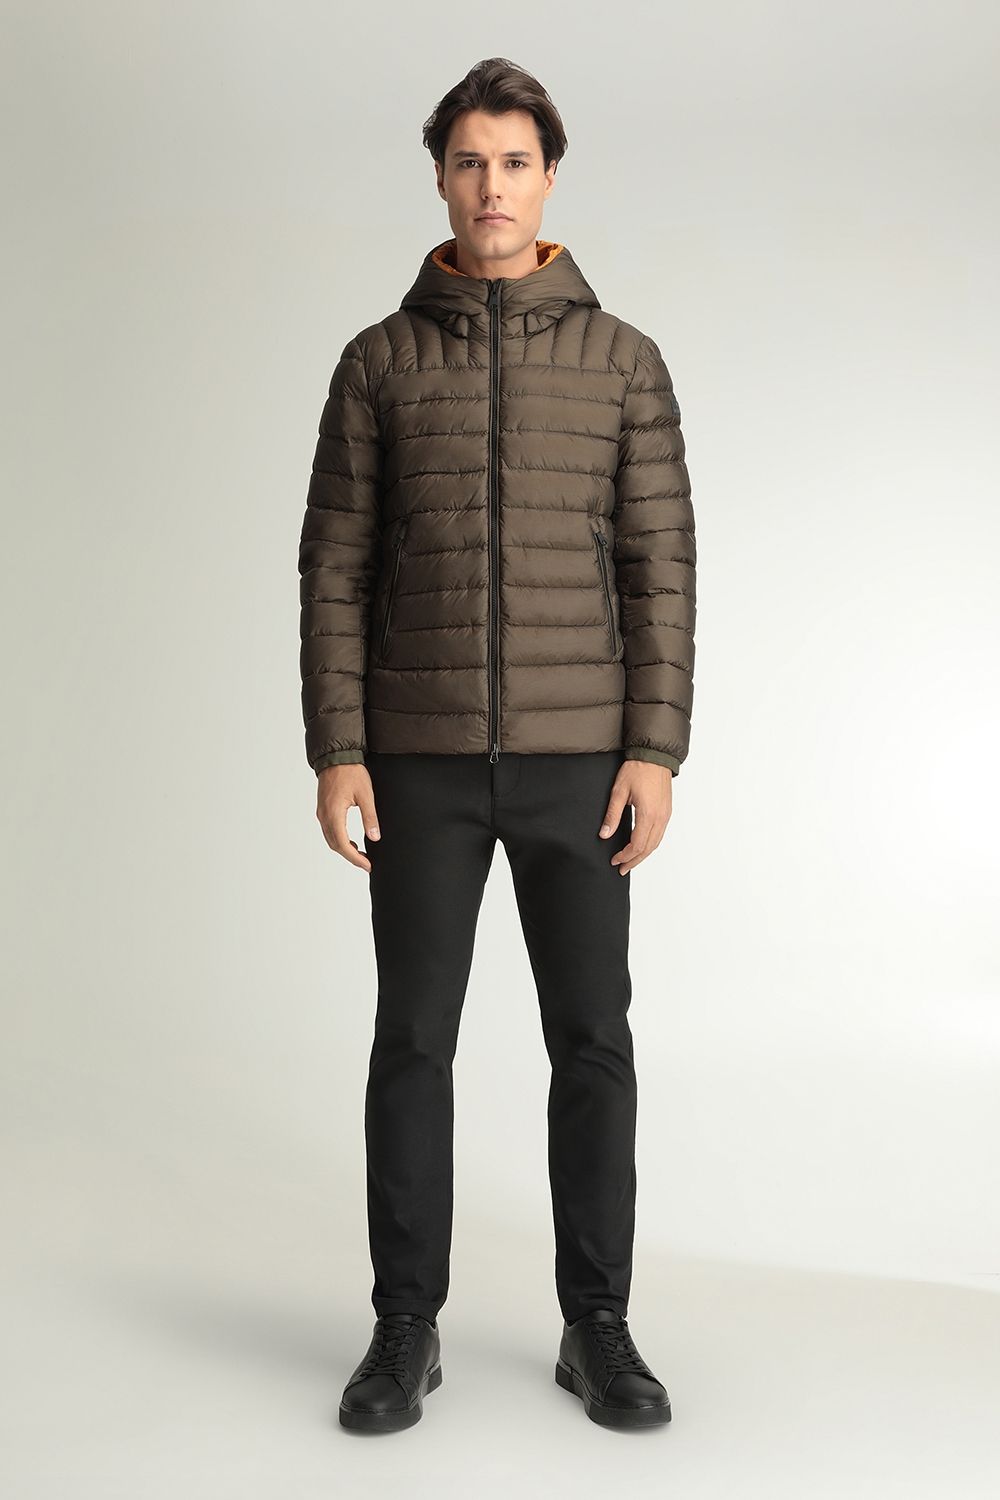 Men's jackets Hetregó  Winter Collection 2020-21